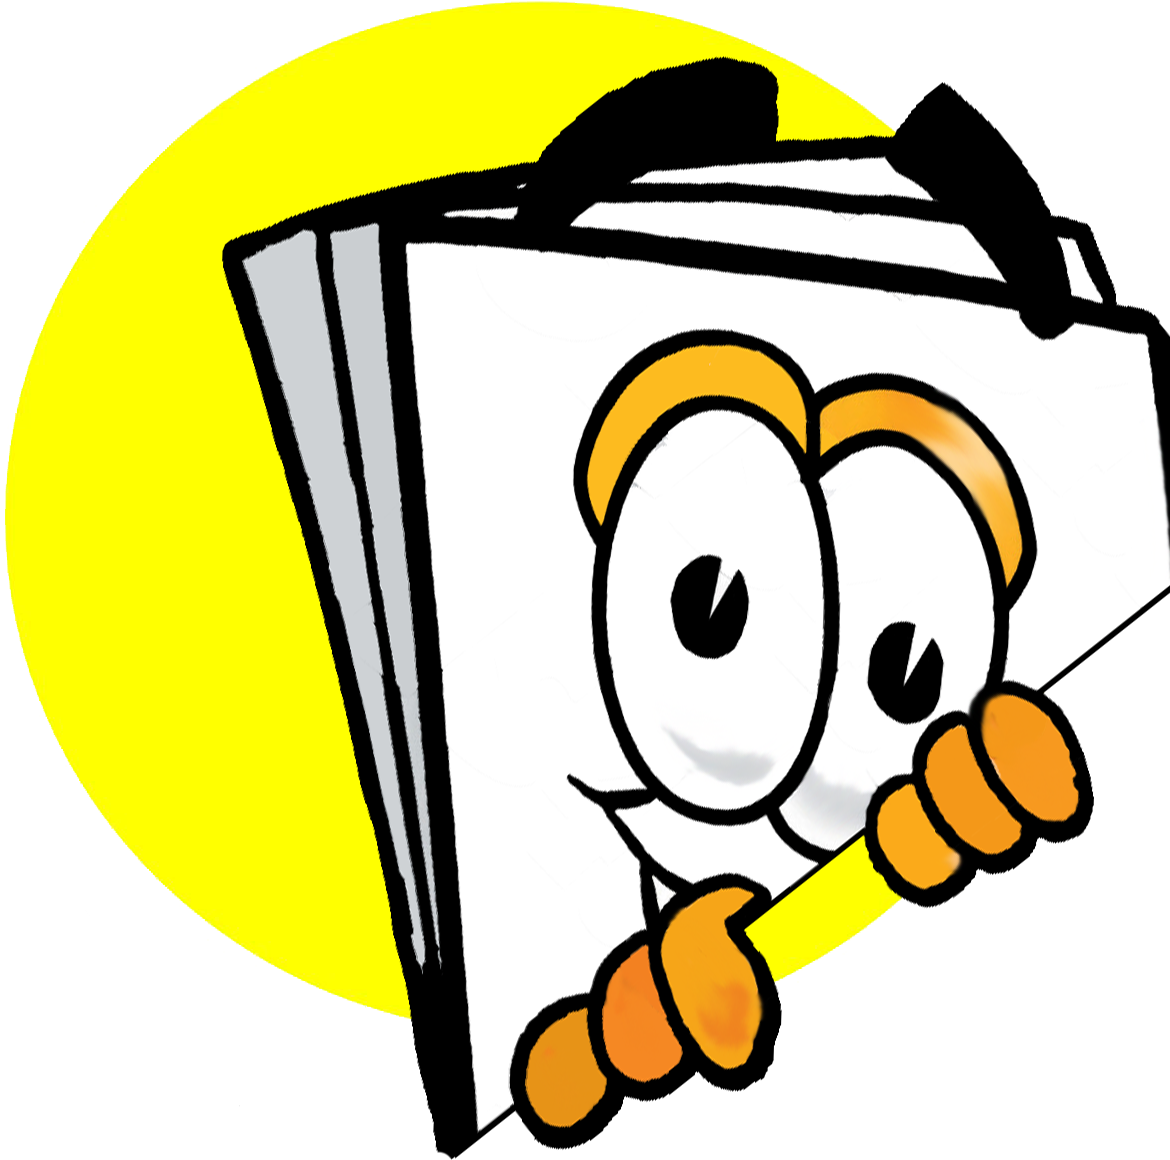 Illustration Of A Cartoon Paper Mascot Peeking Around - Illustration Of A Cartoon Paper Mascot Peeking Around (1232x1344)